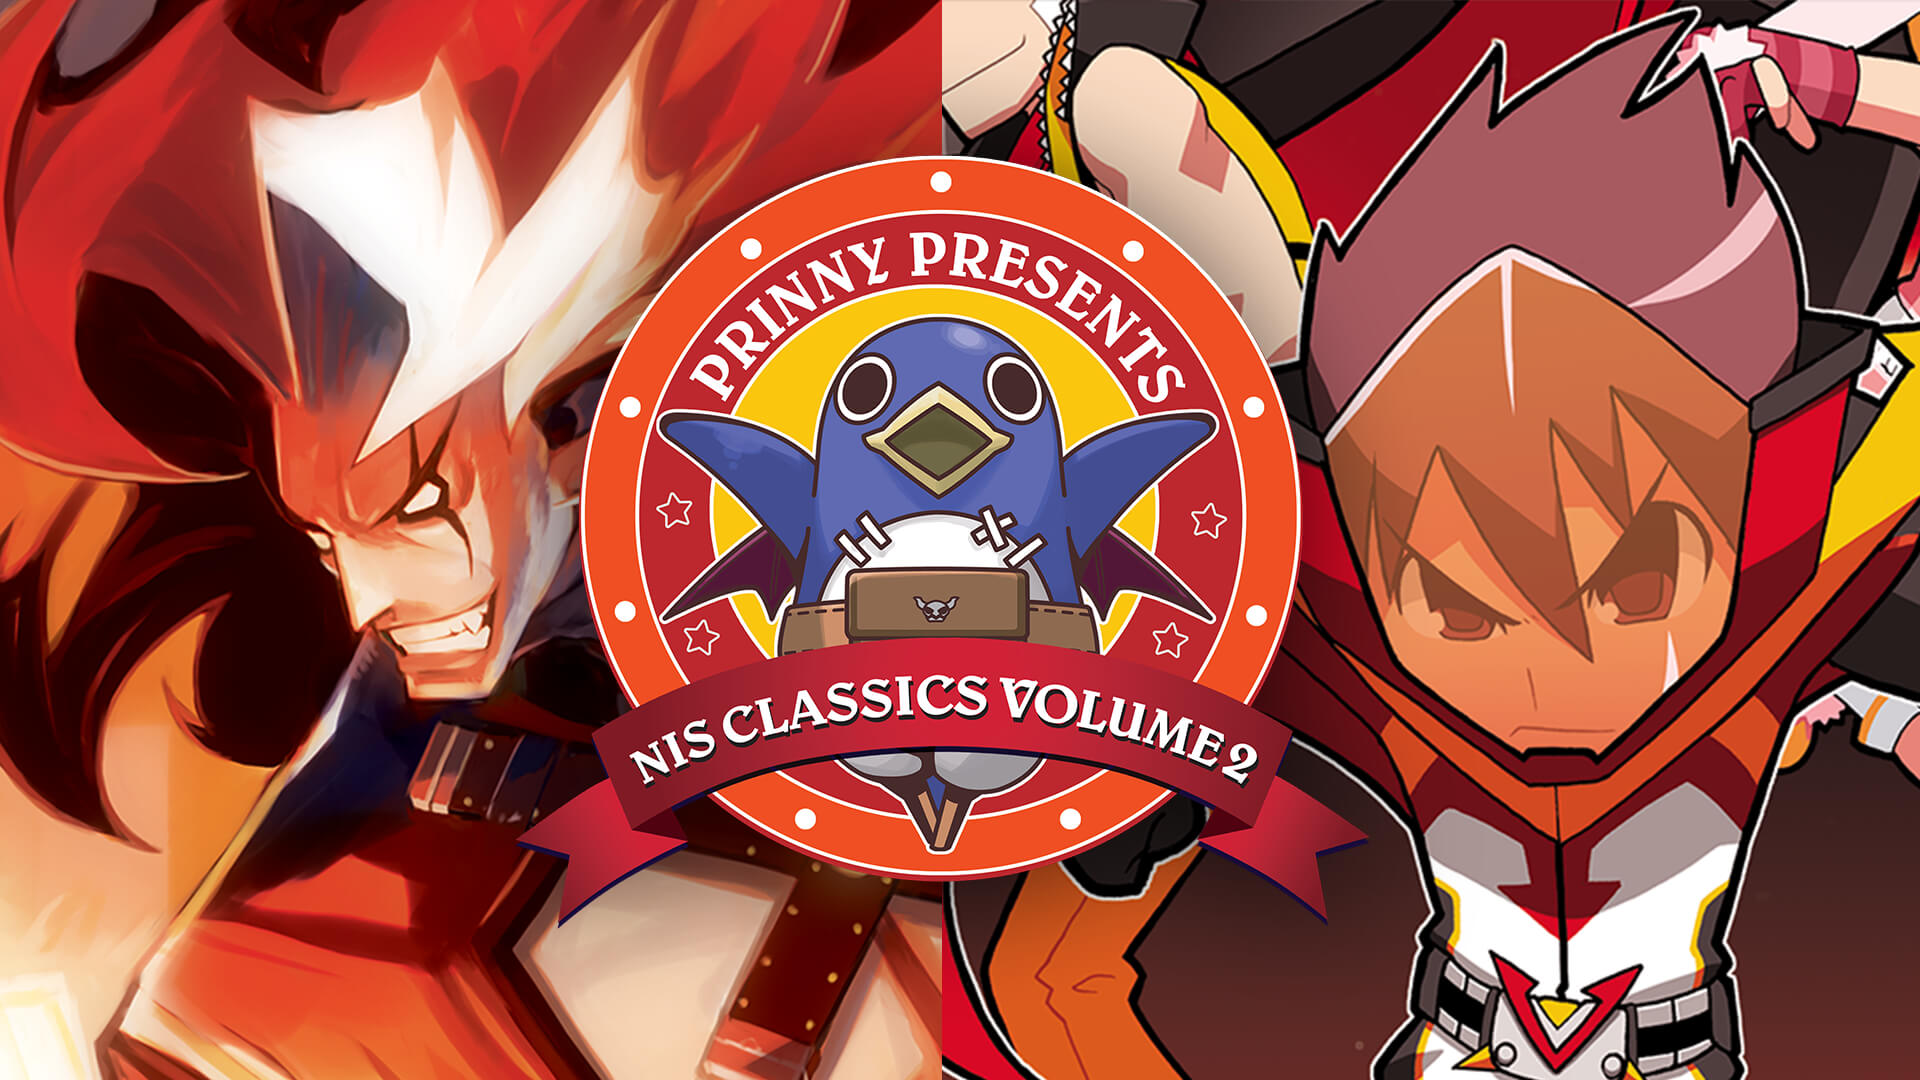 Prinny Presents NIS Classics Volume 2 key artwork featuring Makai Kingdom and ZHP